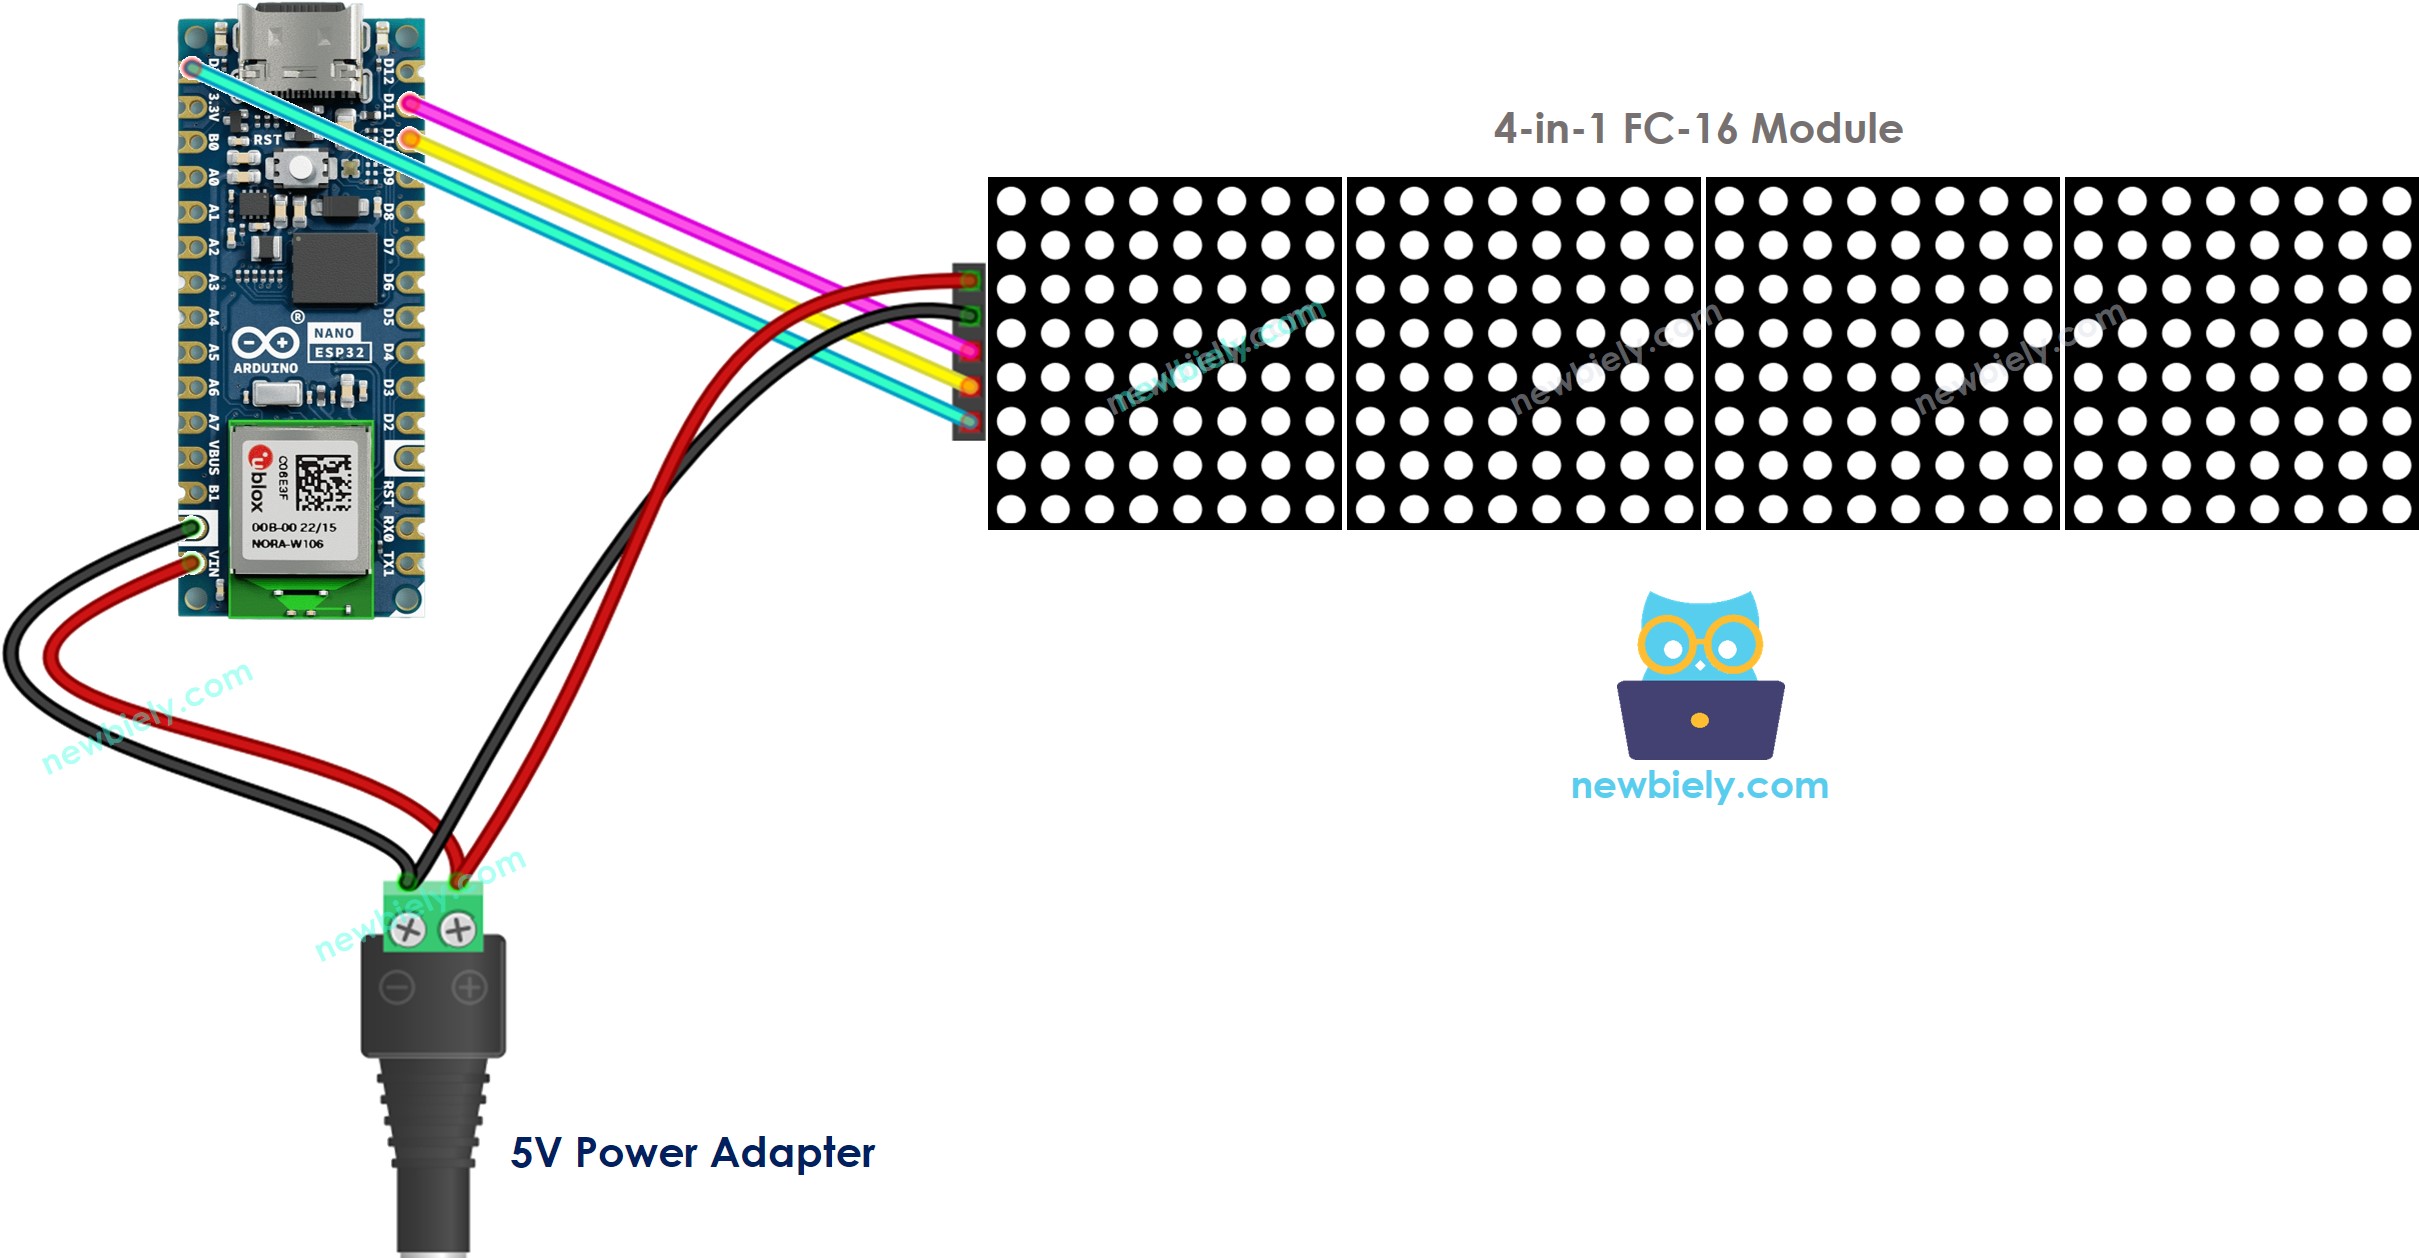 The wiring diagram between Arduino Nano ESP32 and LED matrix display